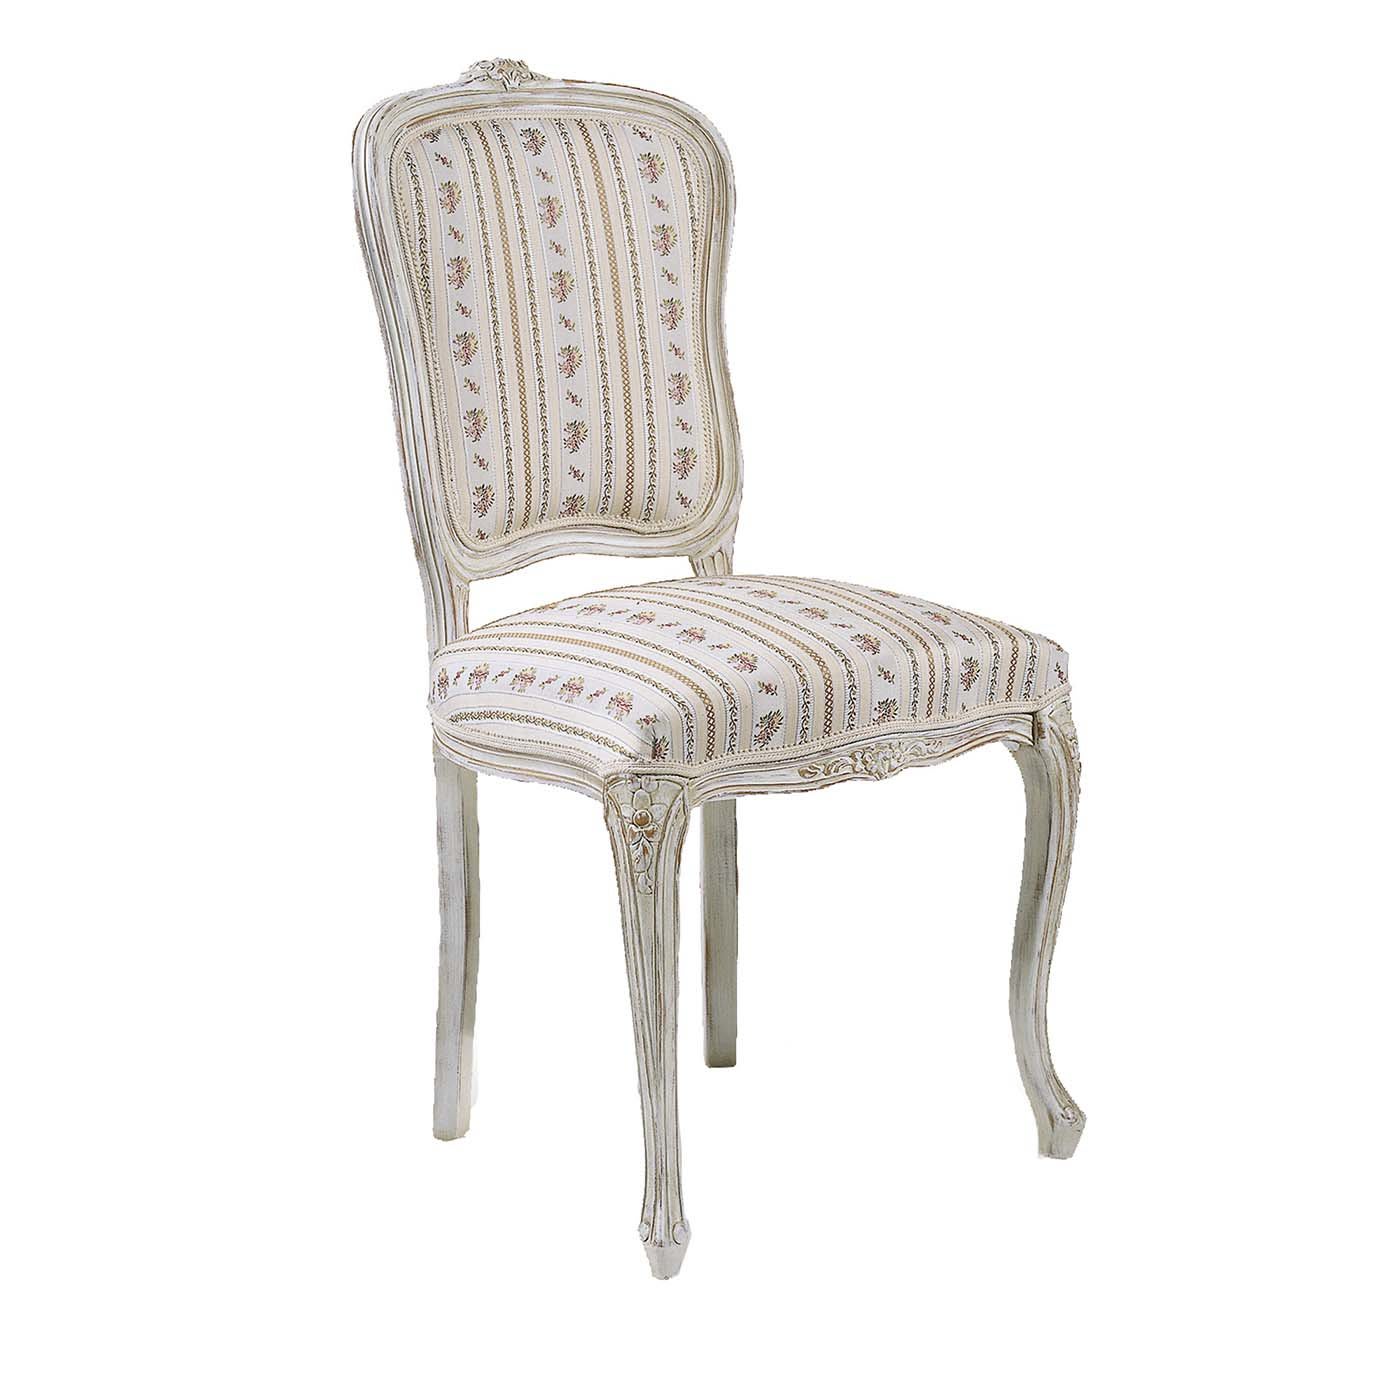 White Floral Chair - Modenese Gastone